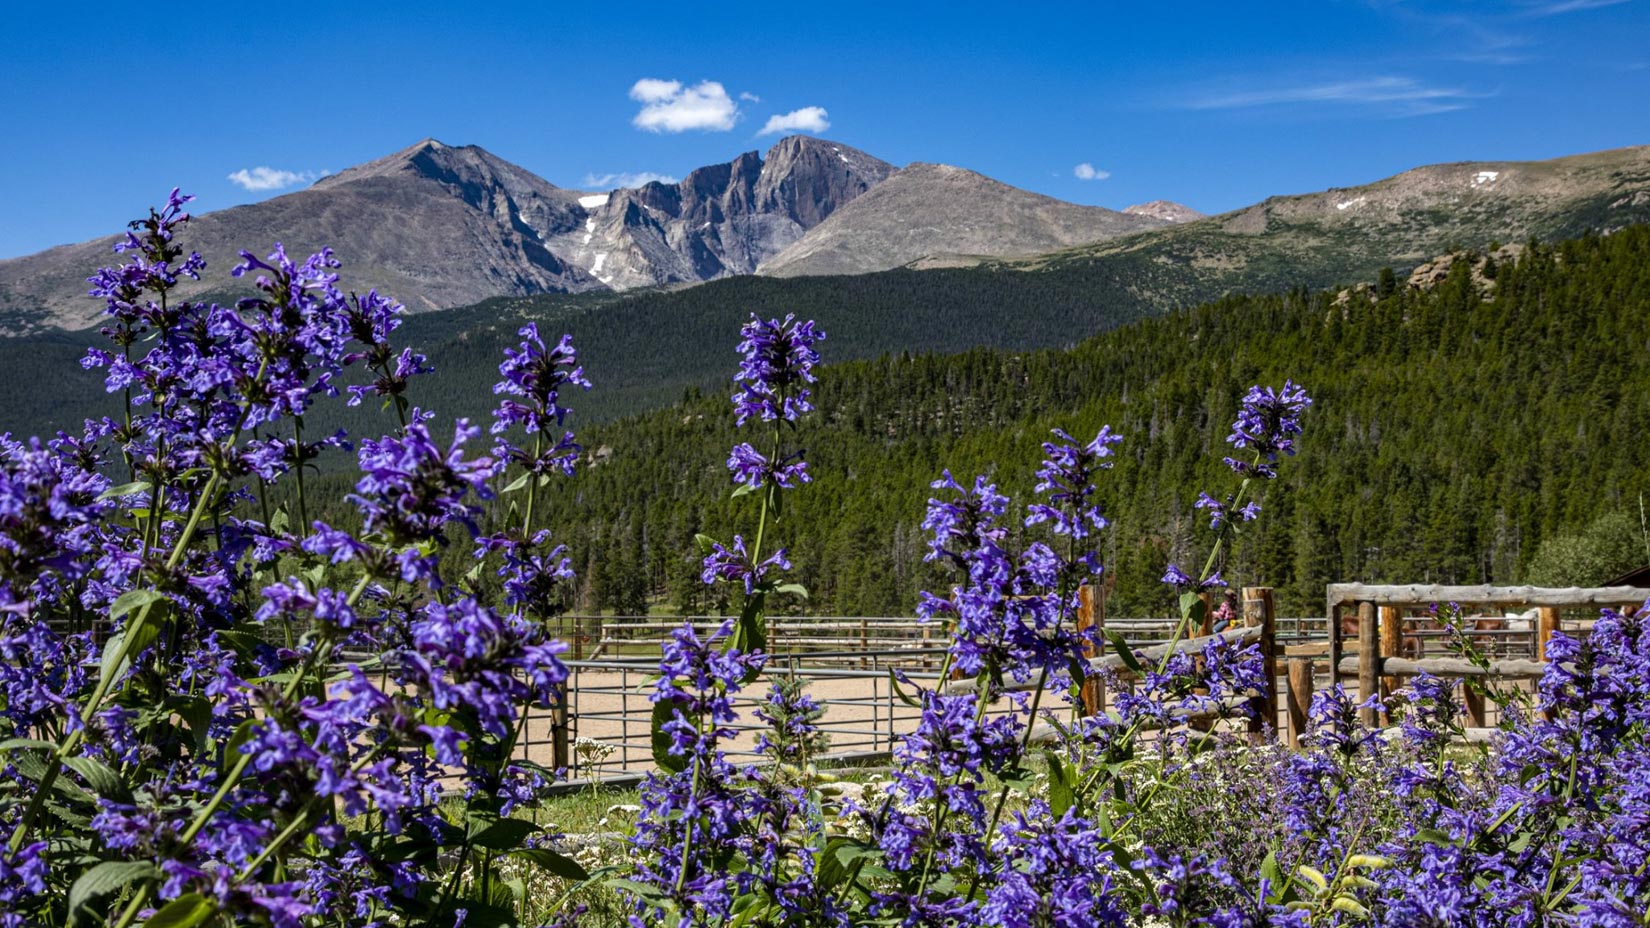 Bright purple flowers and a mountainous landscape.